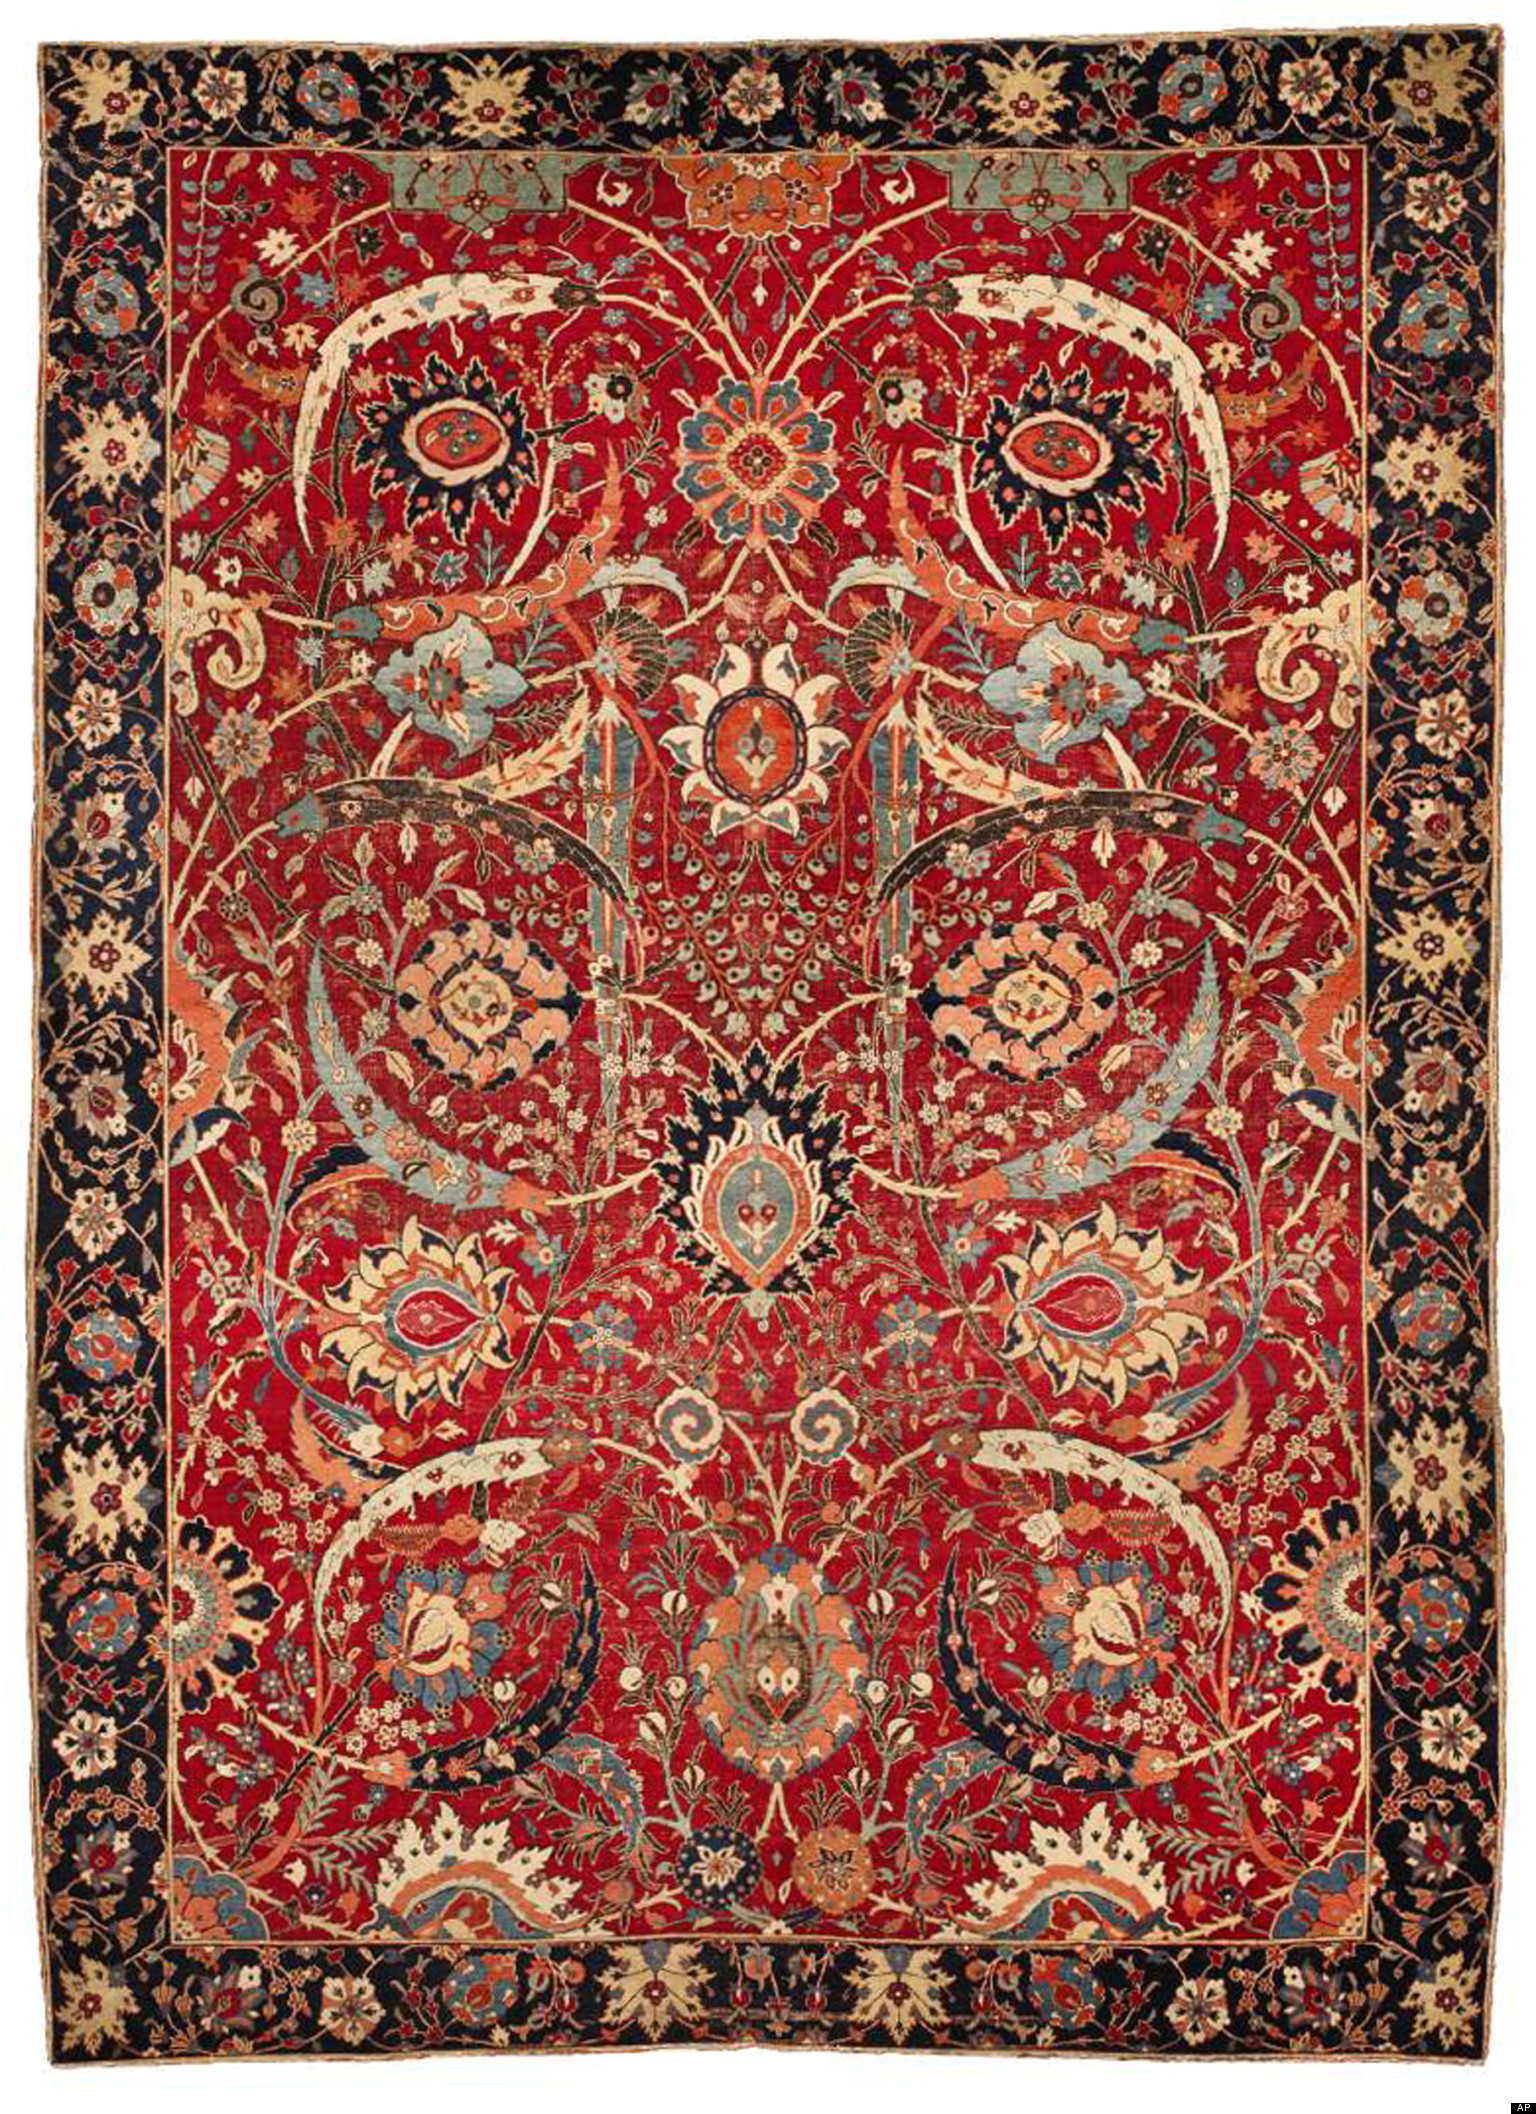 Persian Carpet photo - 5